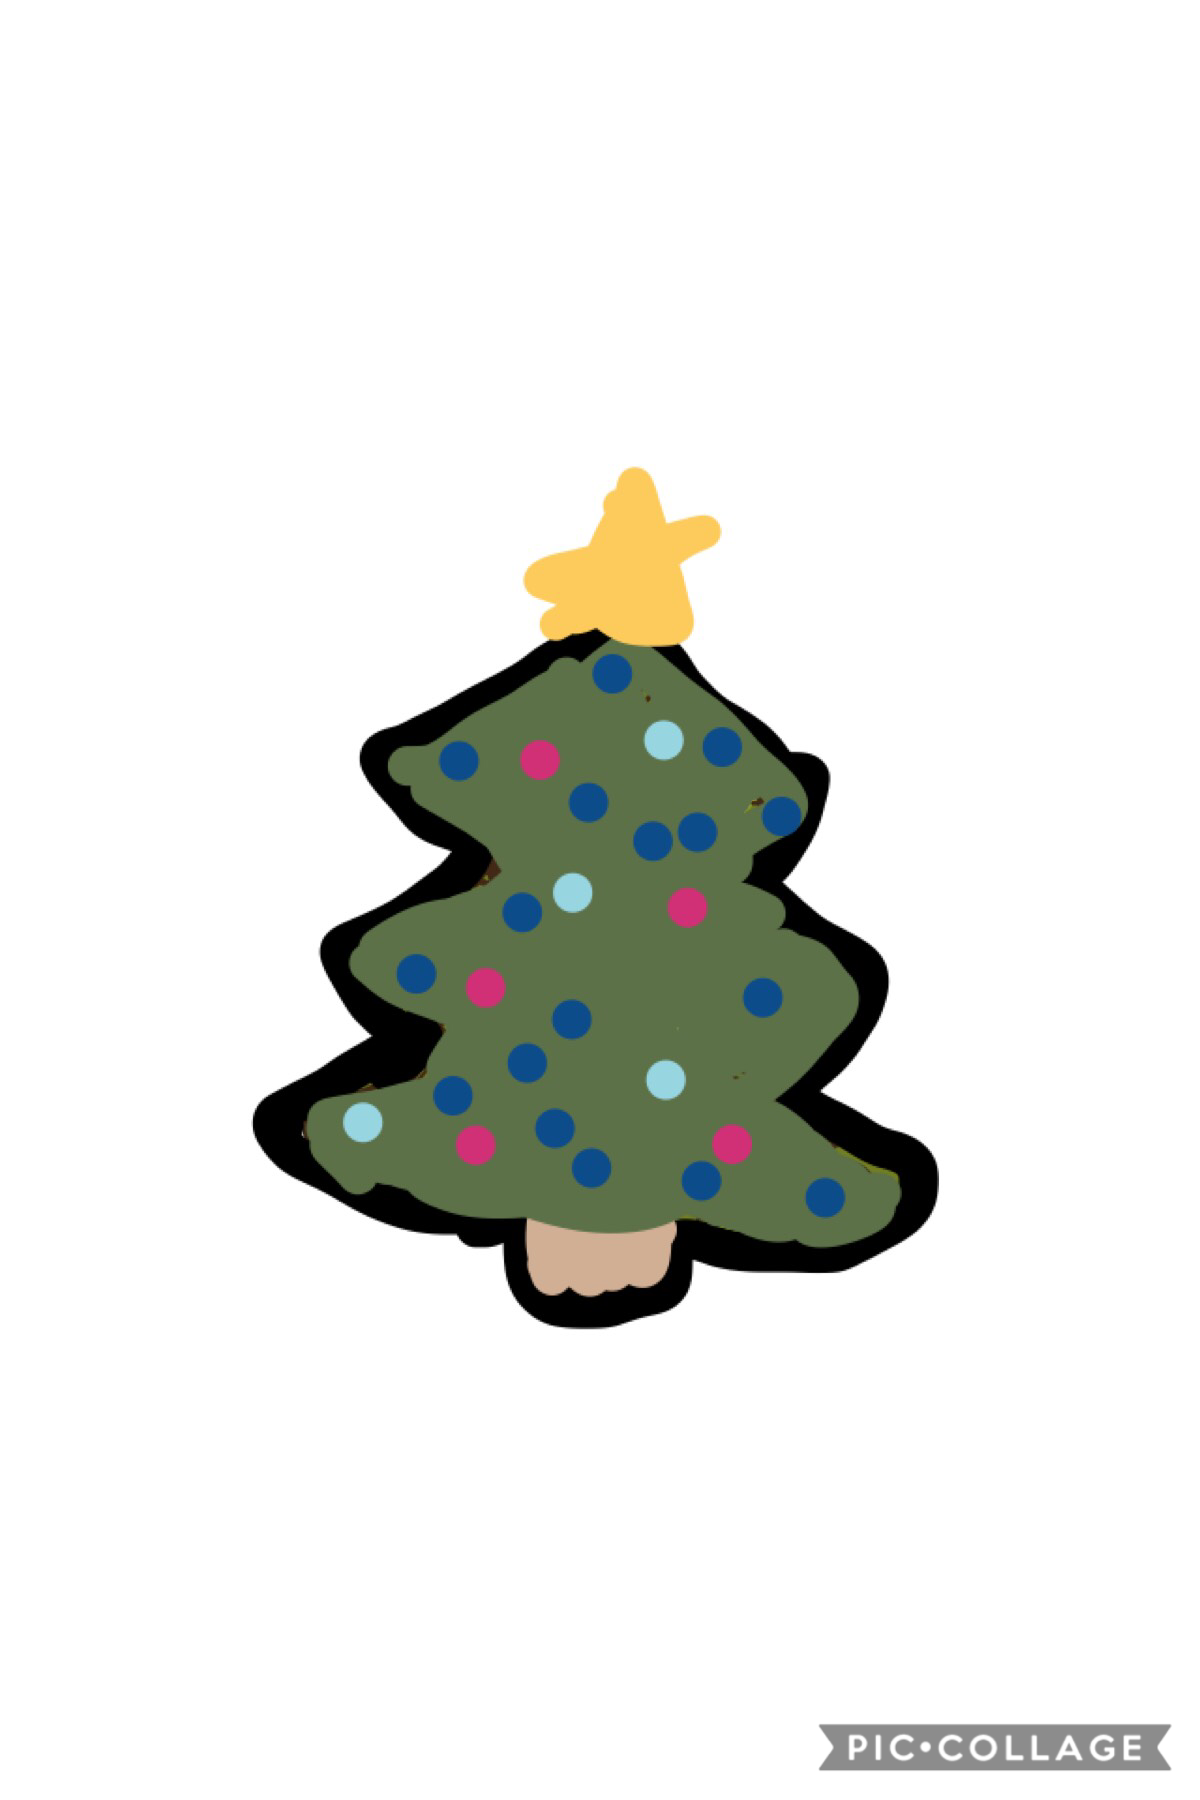 Tree!!
#ChristmasTree